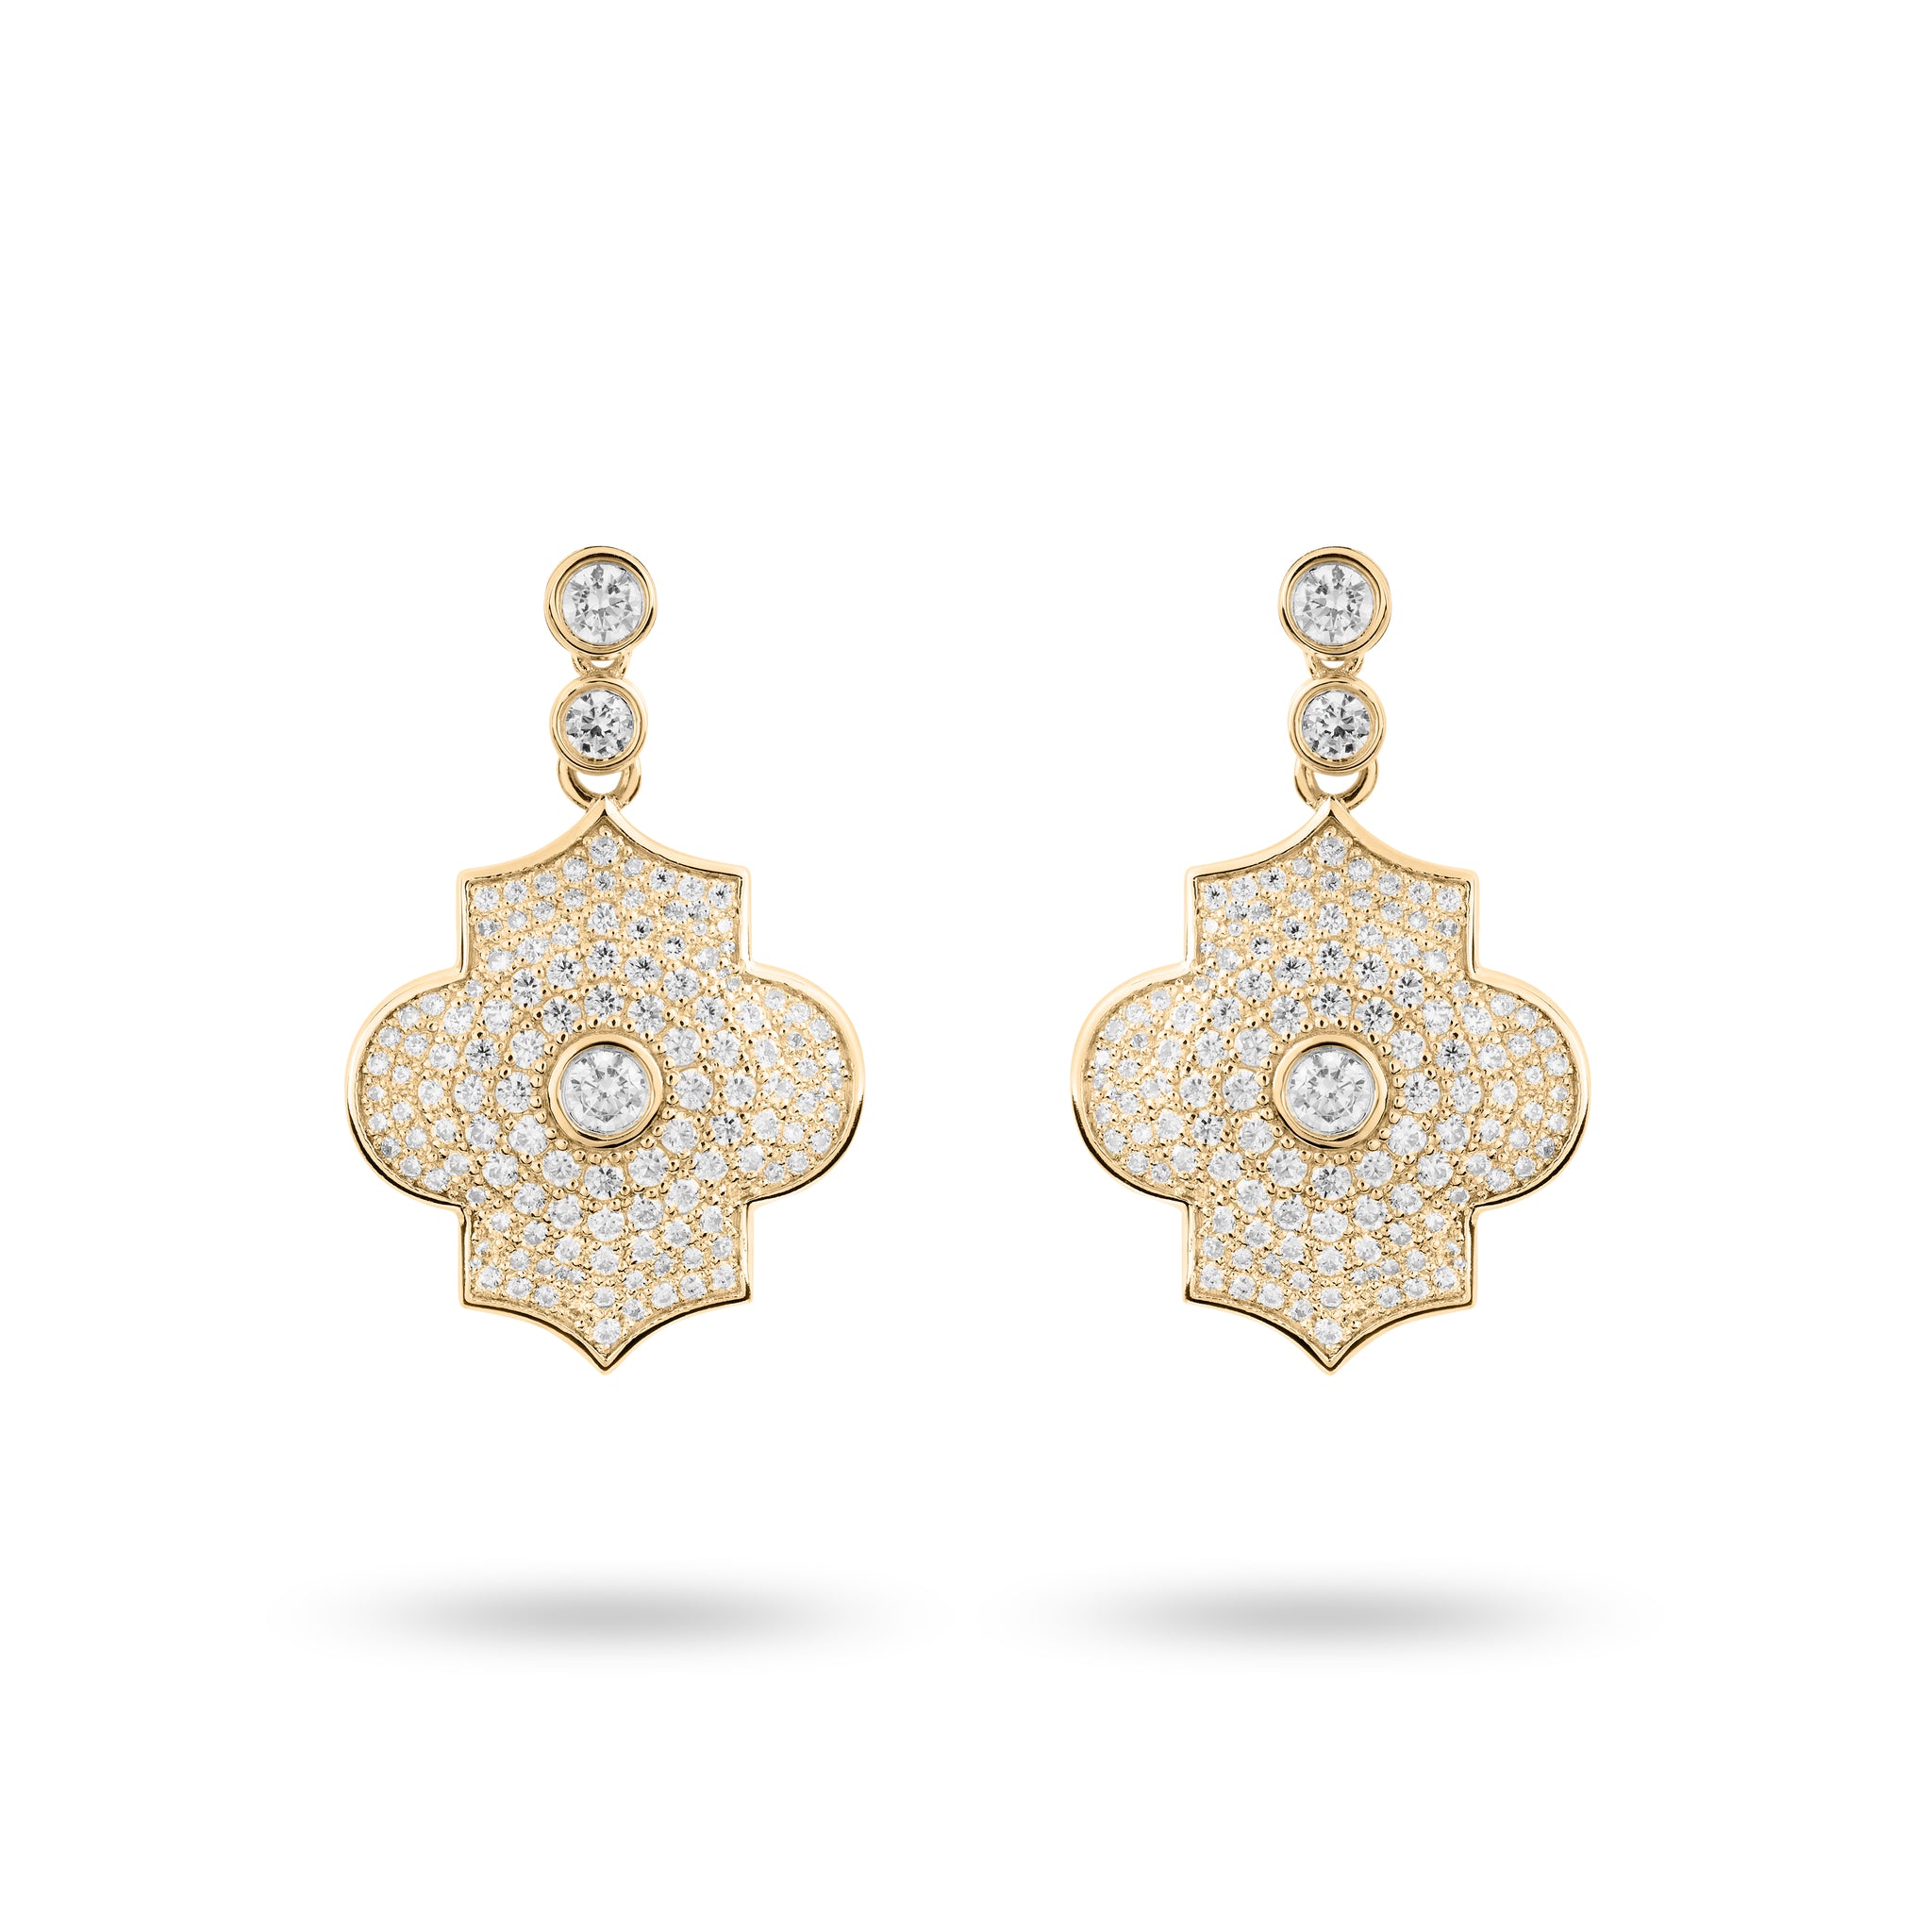 Regal Power- Yellow gold pave earrings - Ksenia Mirella Jewellery 